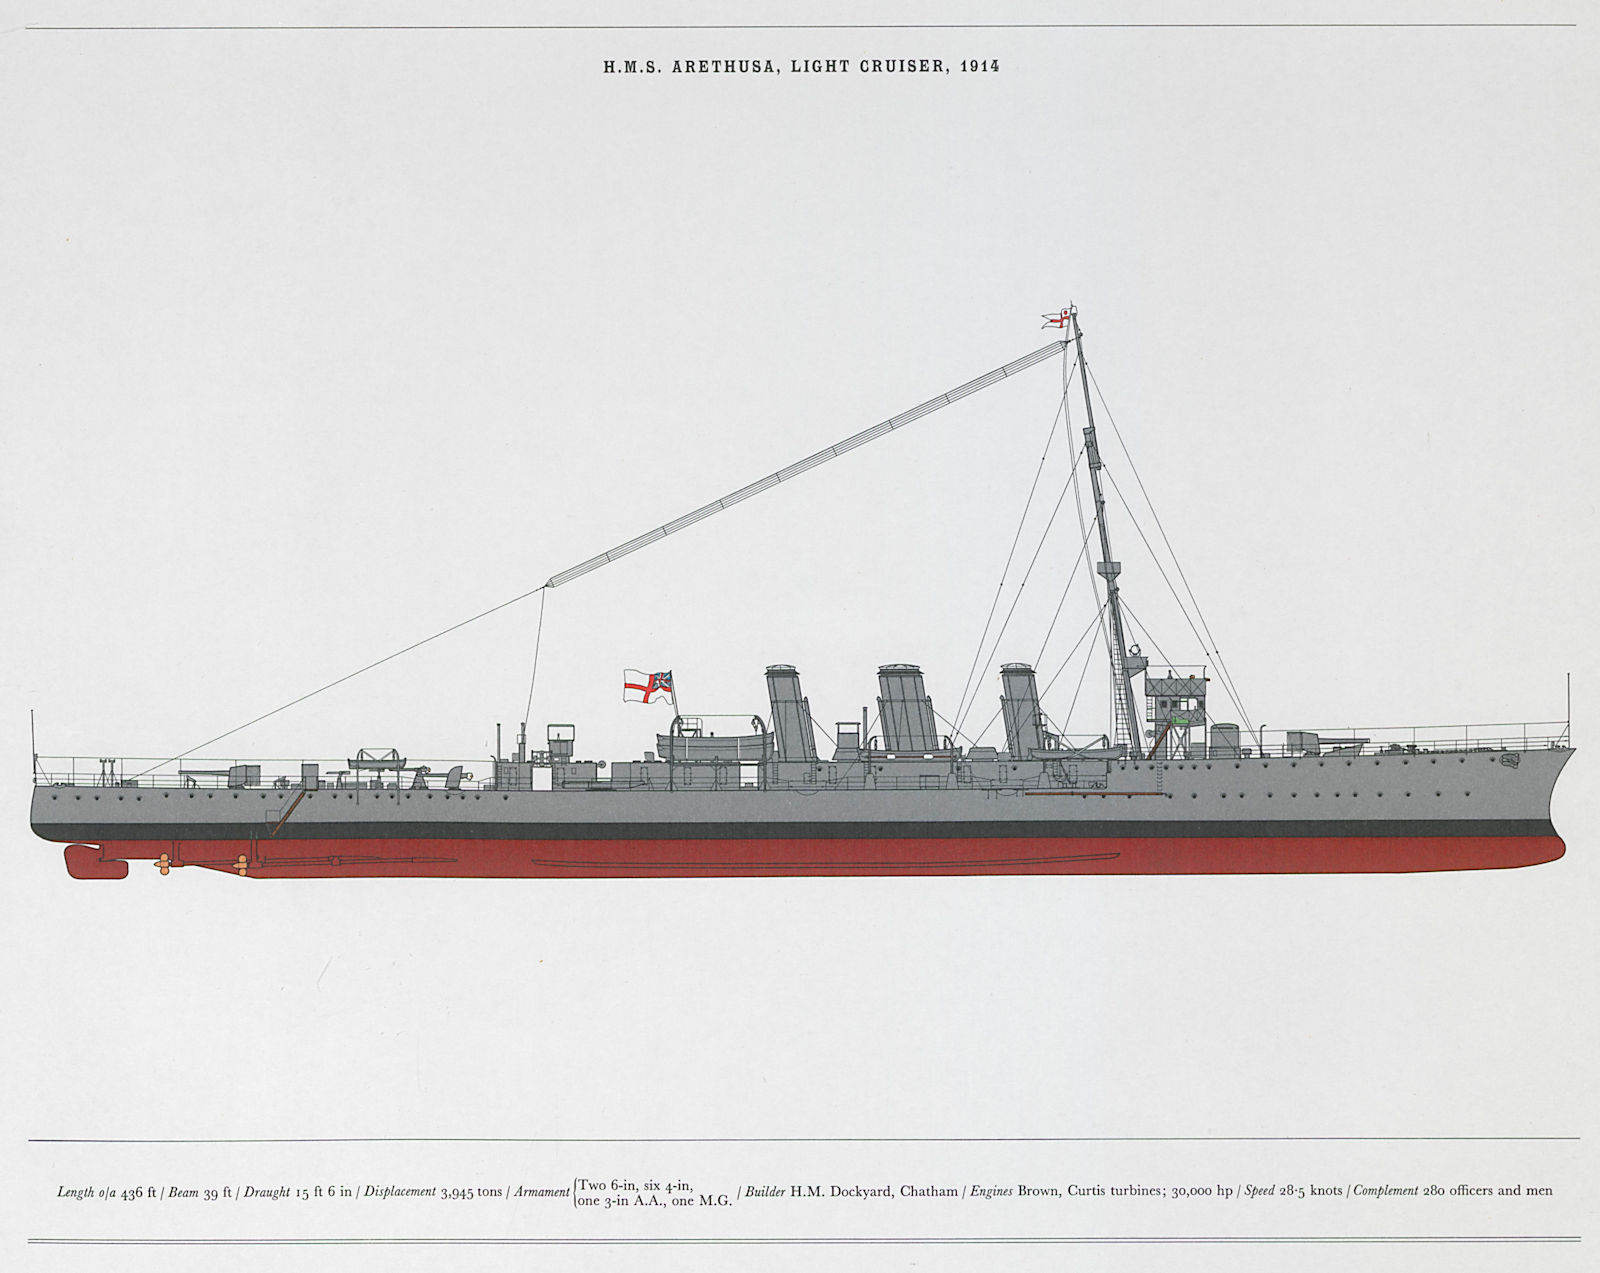 Associate Product H.M.S. Arethusa, Light Cruiser, 1914. Royal Navy warship. MARTIN HOLBROOK 1971